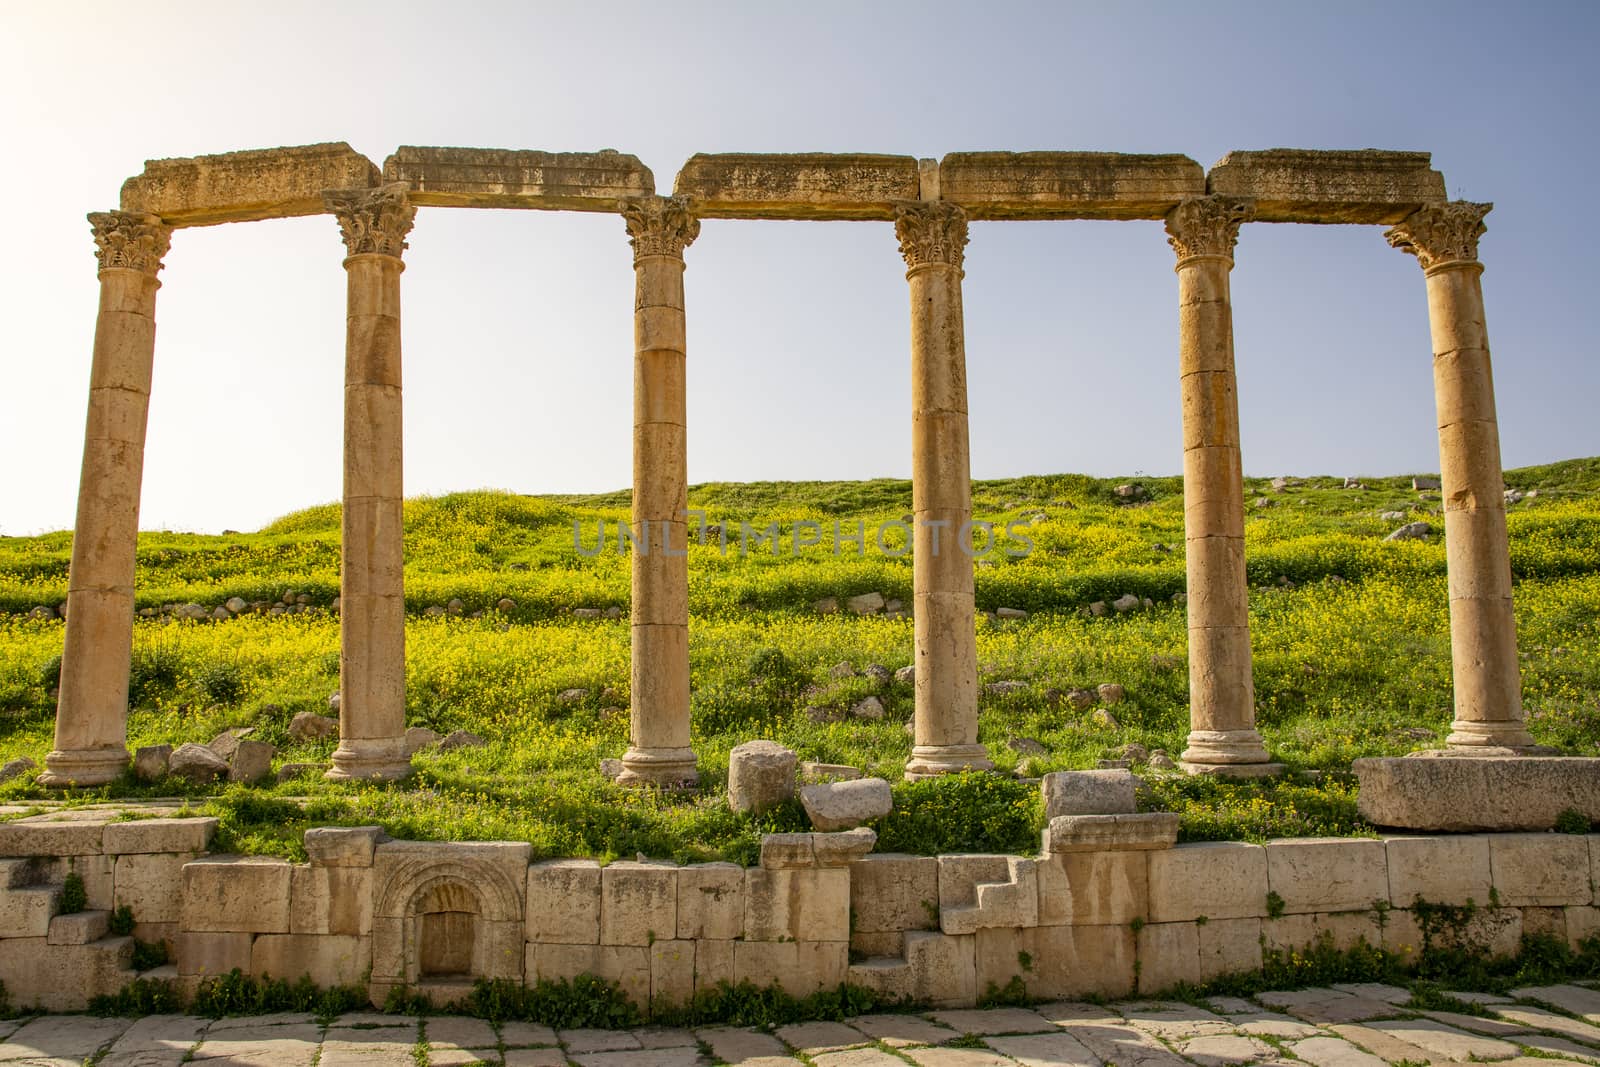 Pillars of the Colonnaded Street at the Roman historical site of Gerasa, Jerash, Jordan. Travel and Tourism in Jordan